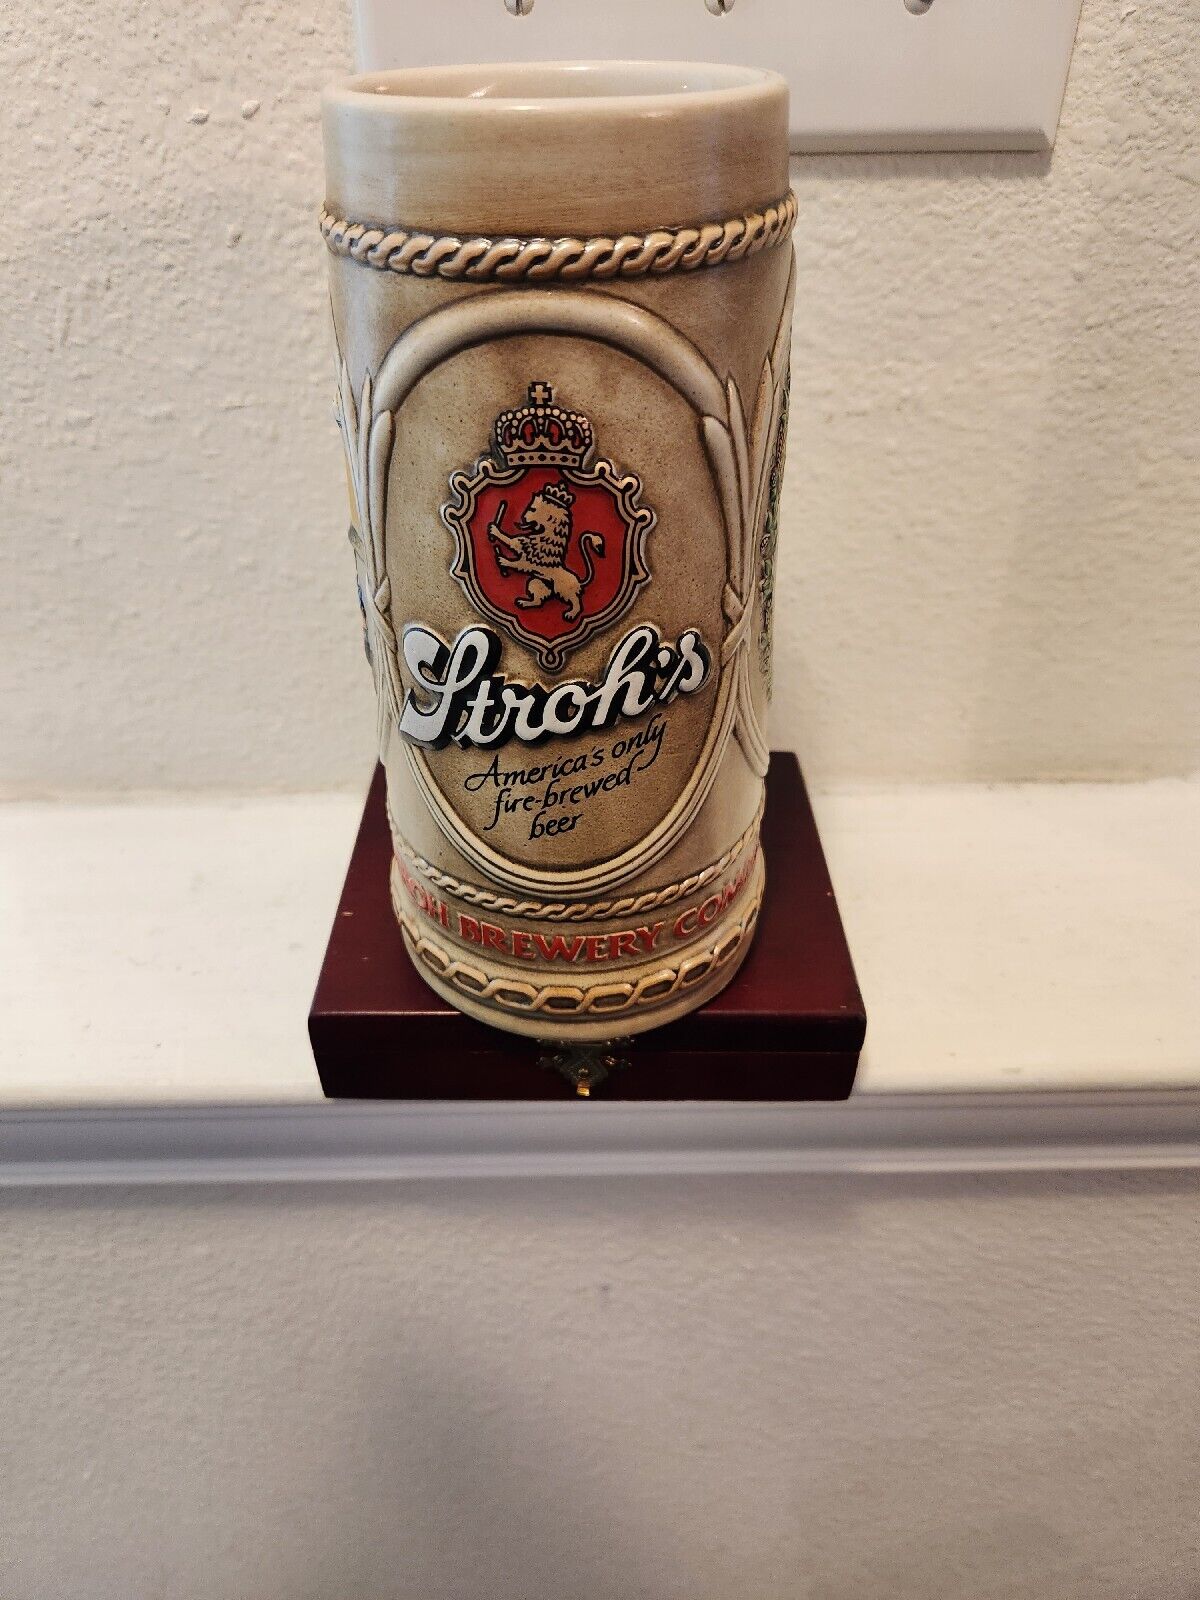 Stroh's Brewery Company Stein Beer Mug - 200 Years Heritage Series - #67265